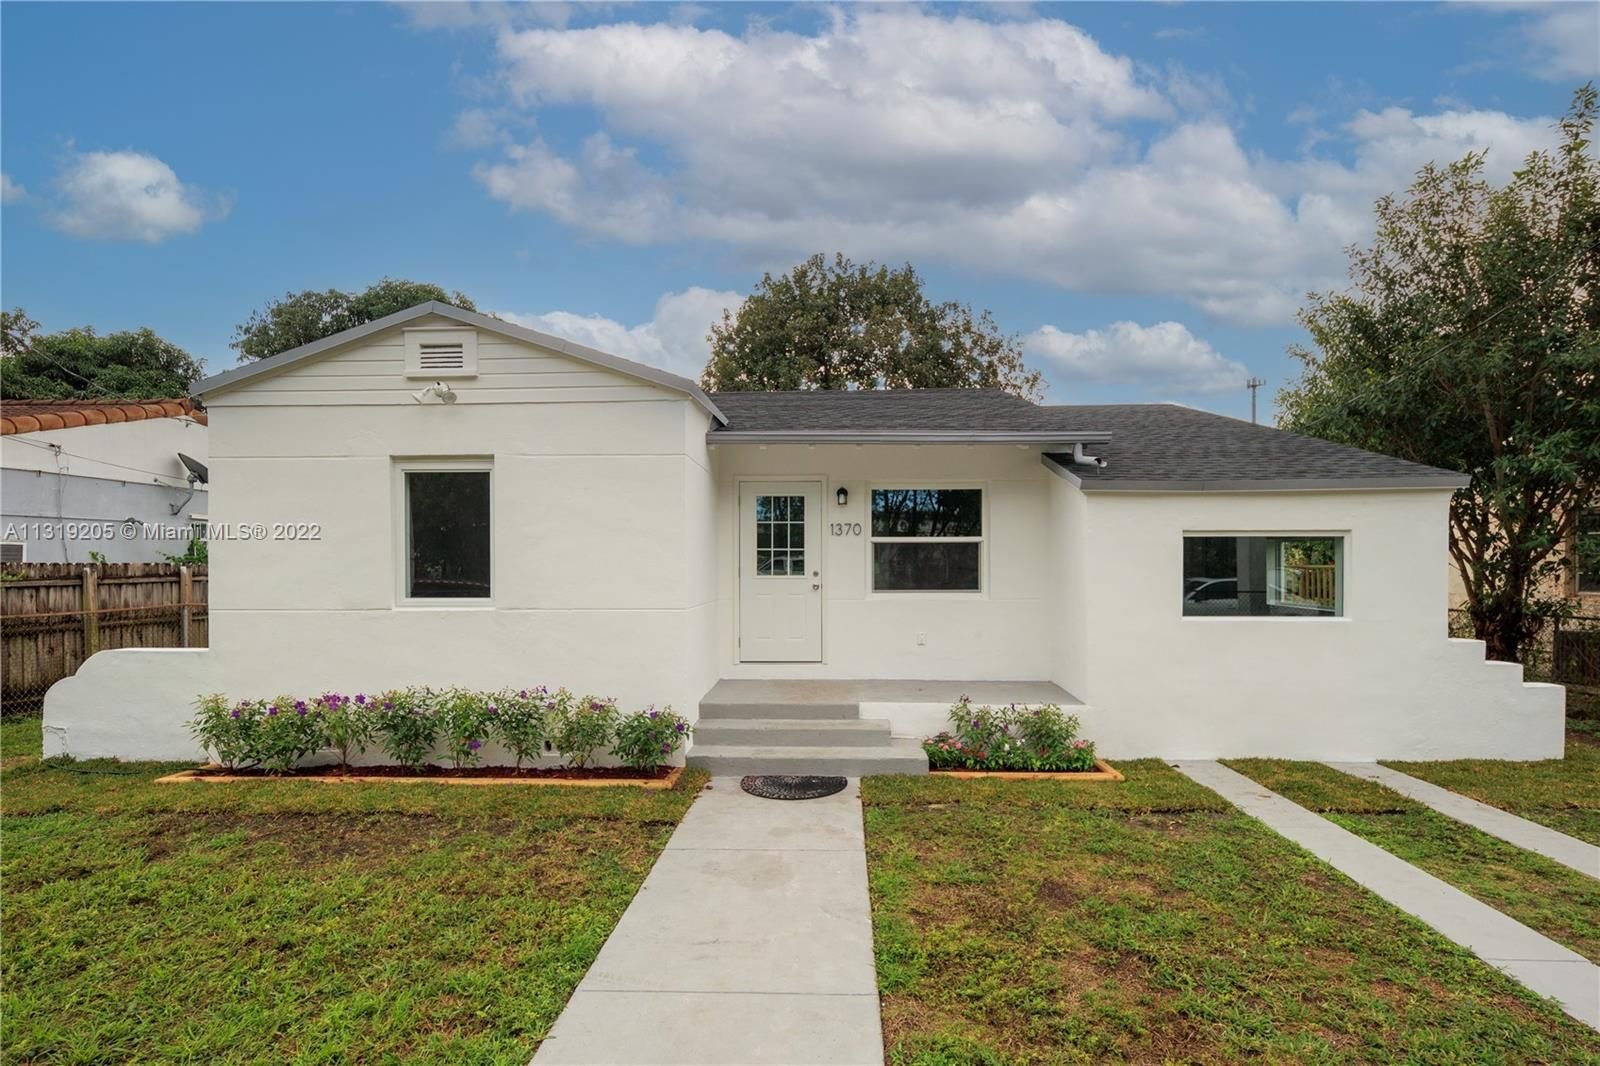 Real estate property located at 1370 39th St, Miami-Dade County, Miami, FL